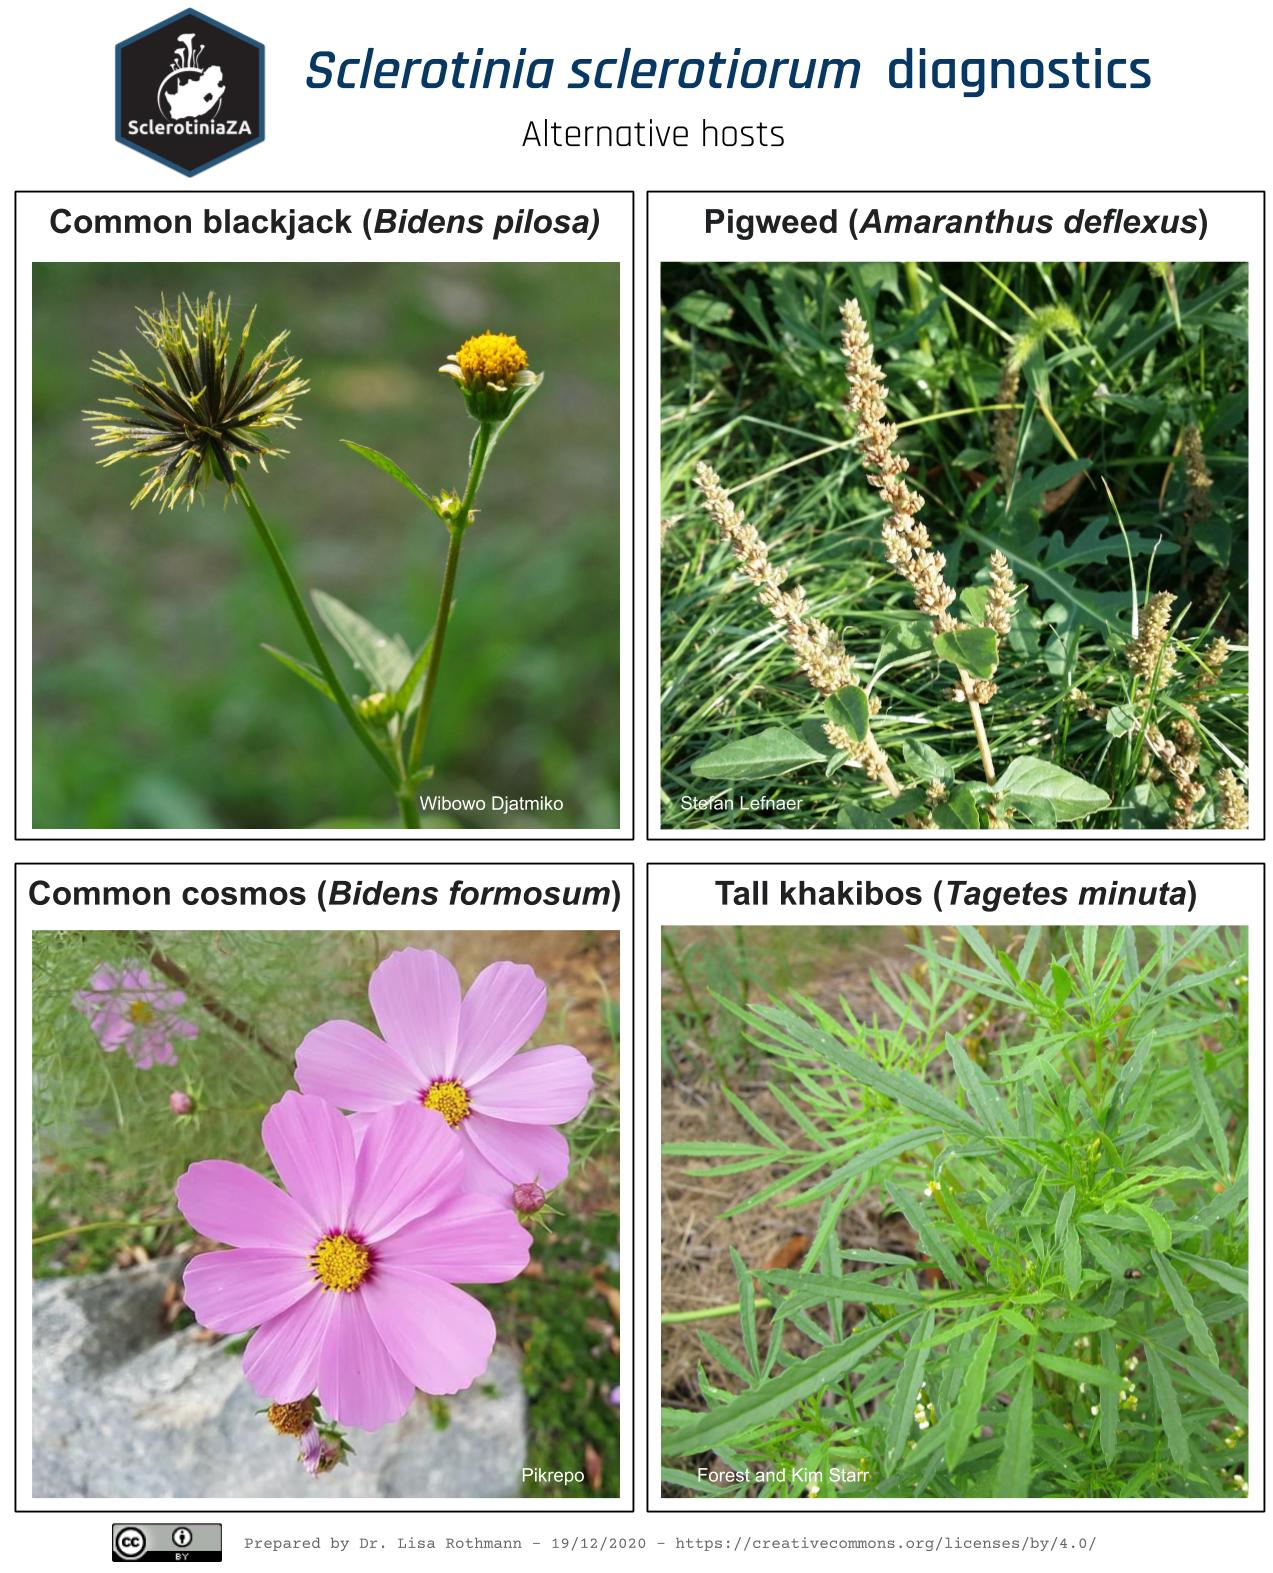 Alternative hosts associated with Sclerotinia sclerotiorum - weeds